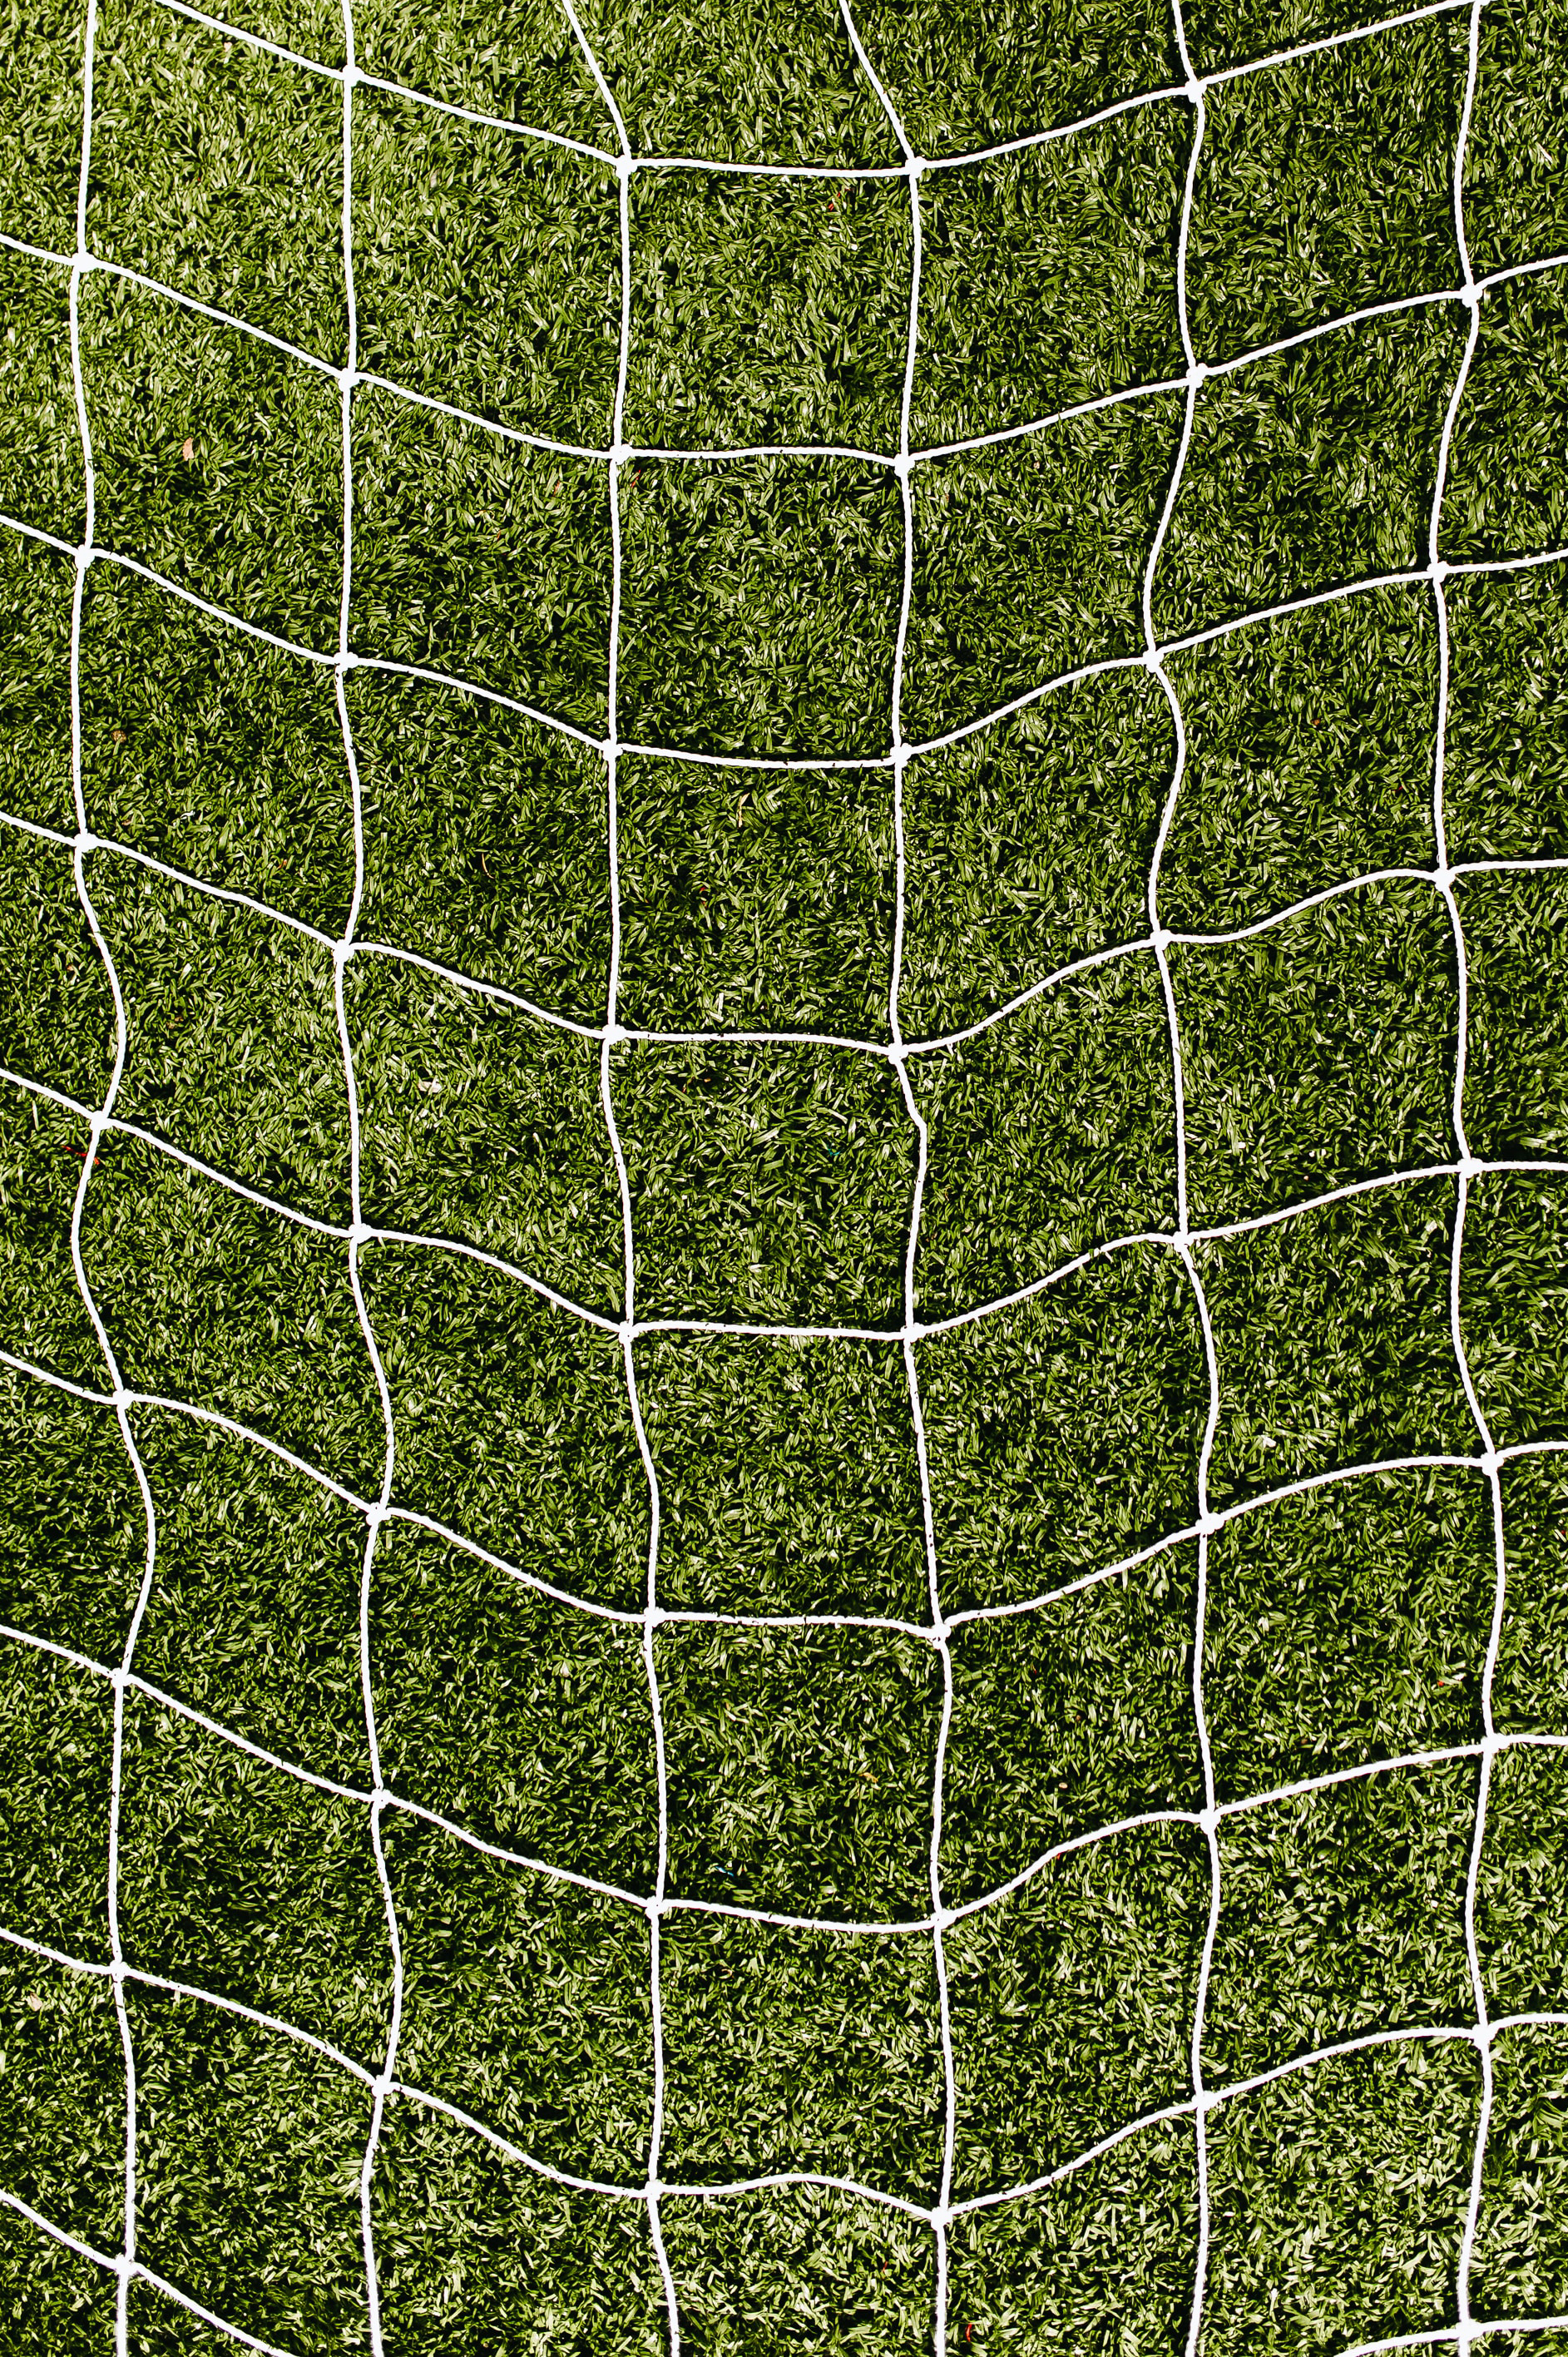 Windows Backgrounds grass, texture, textures, grid, lawn